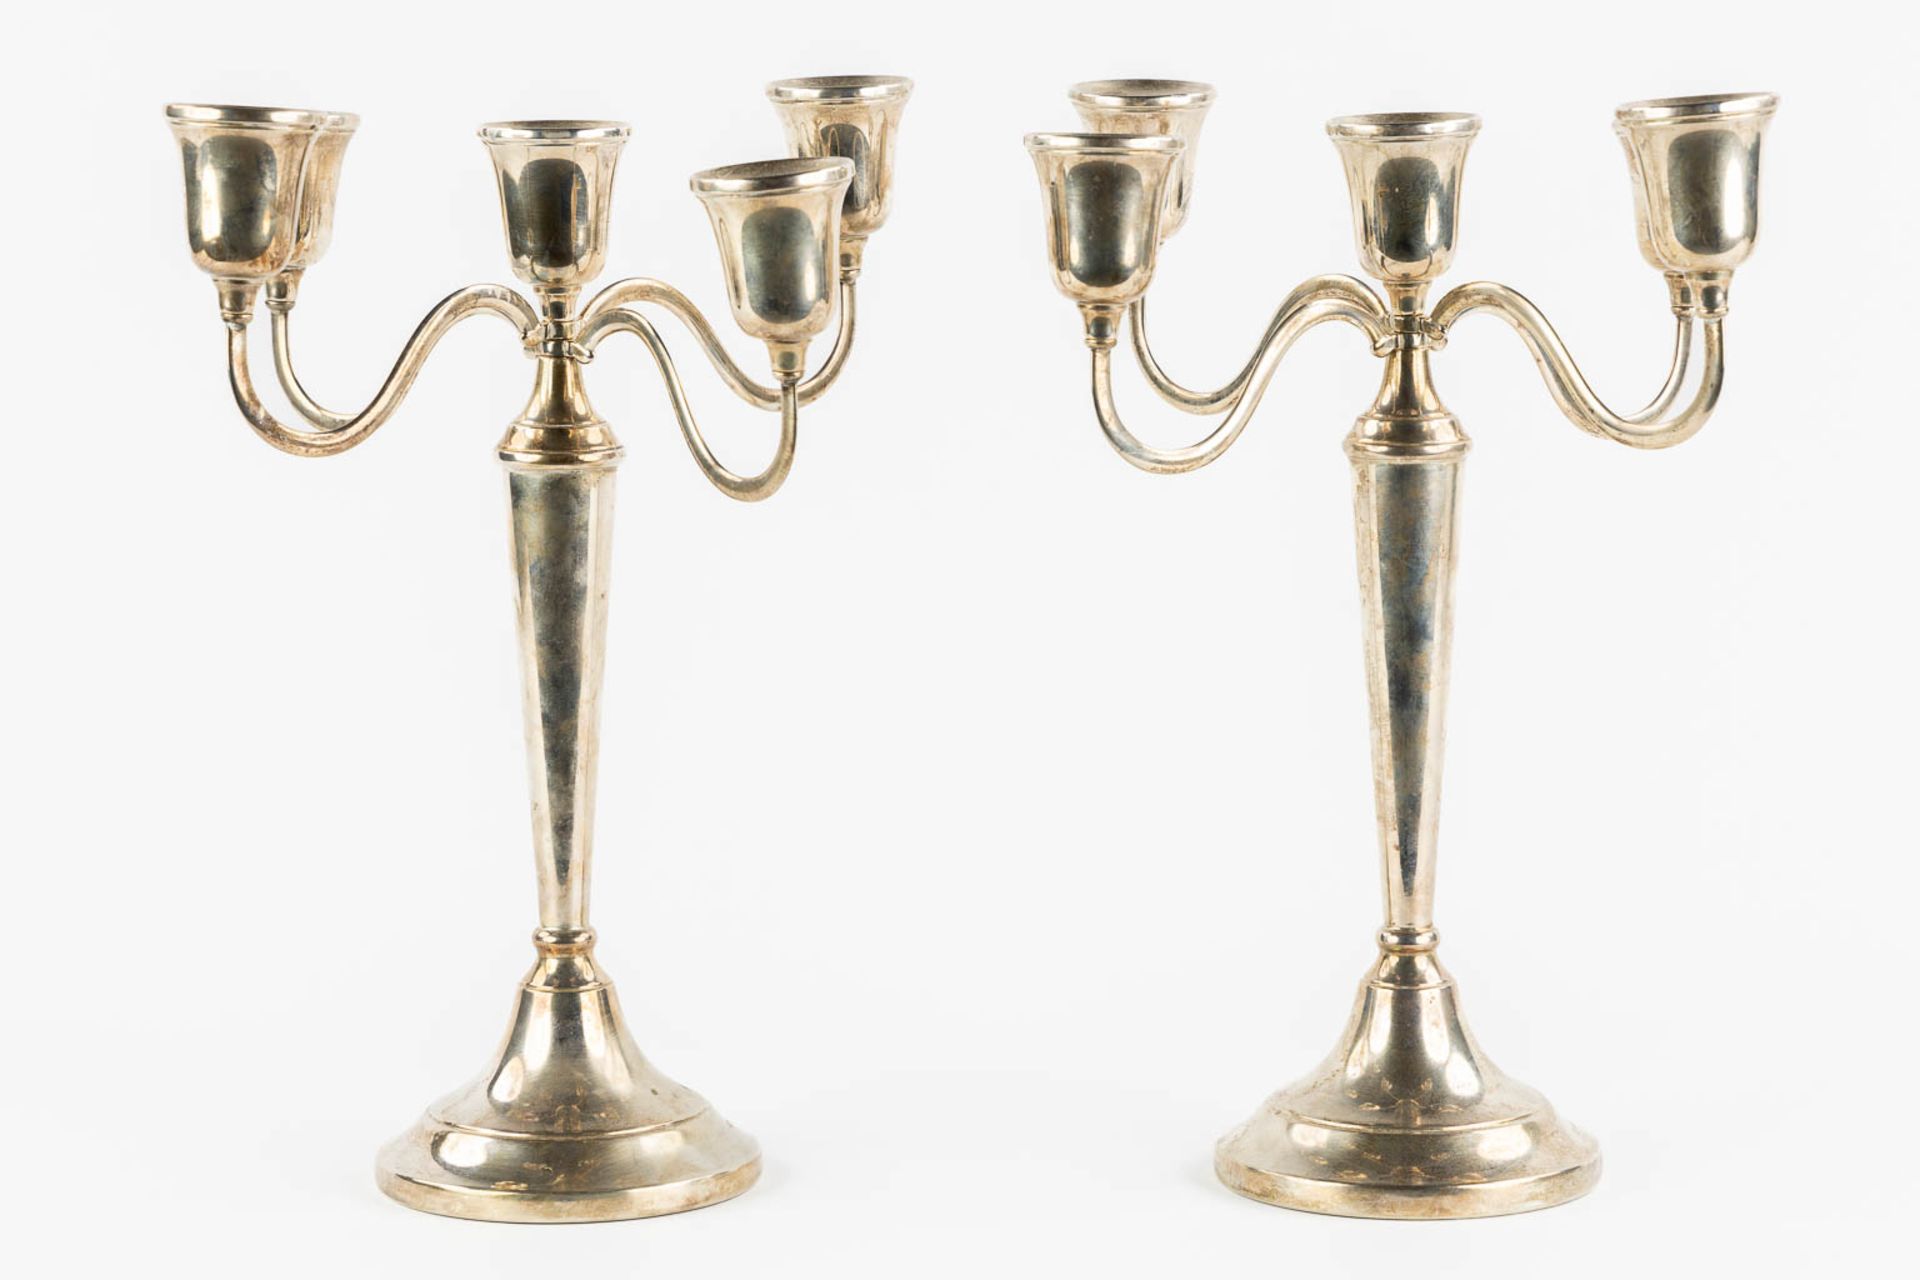 David Shaw Silverware Ltd, A pair of silver candelabra. 1992. (L:28 x W:28 x H:34 cm) - Image 4 of 12